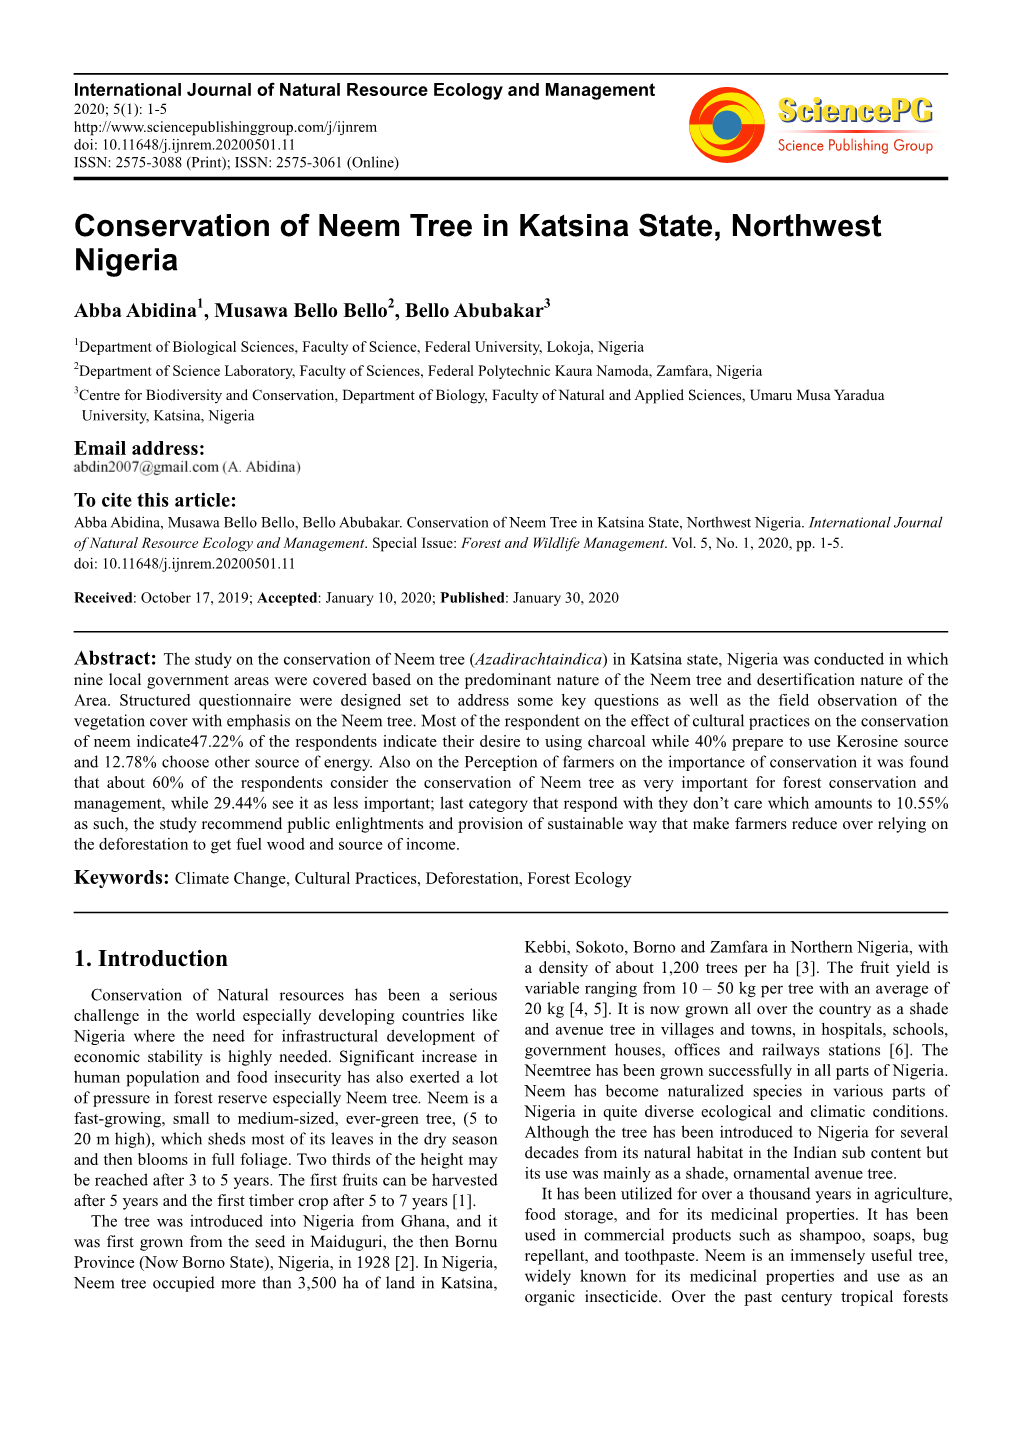 Conservation of Neem Tree in Katsina State, Northwest Nigeria